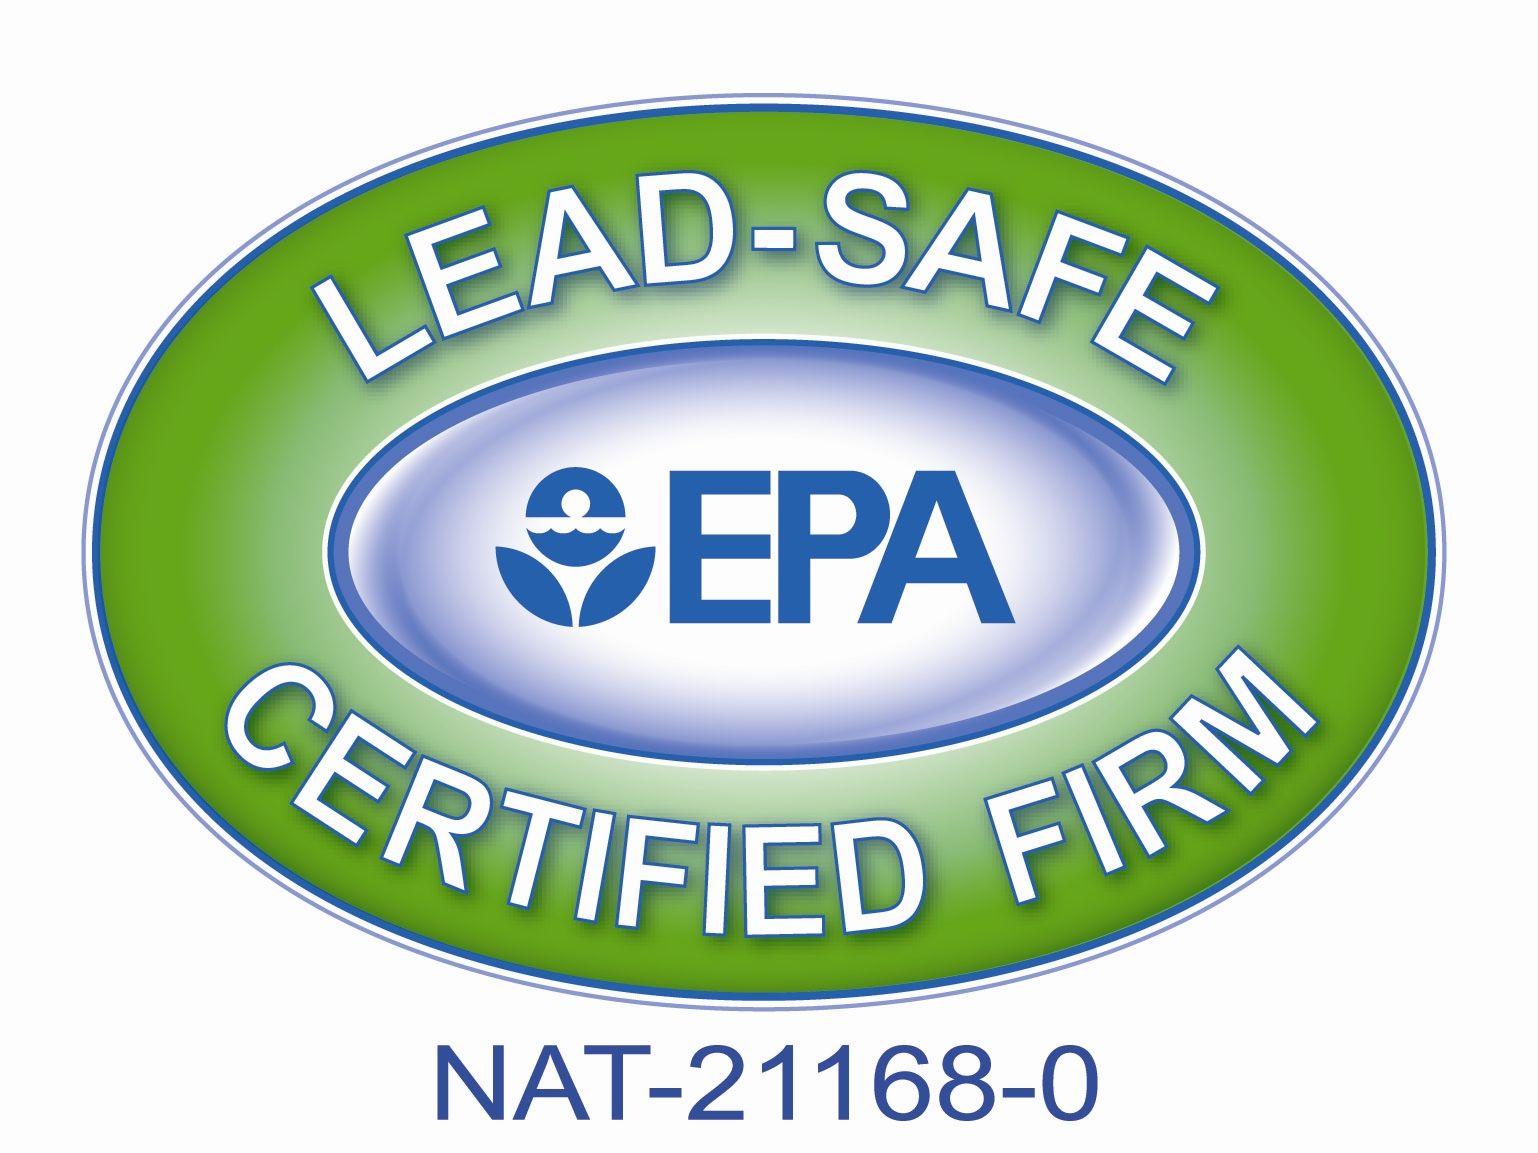 EPA Lead Safe Logo - MA Restoration Inc. » Lead-Safe-EPA-logo